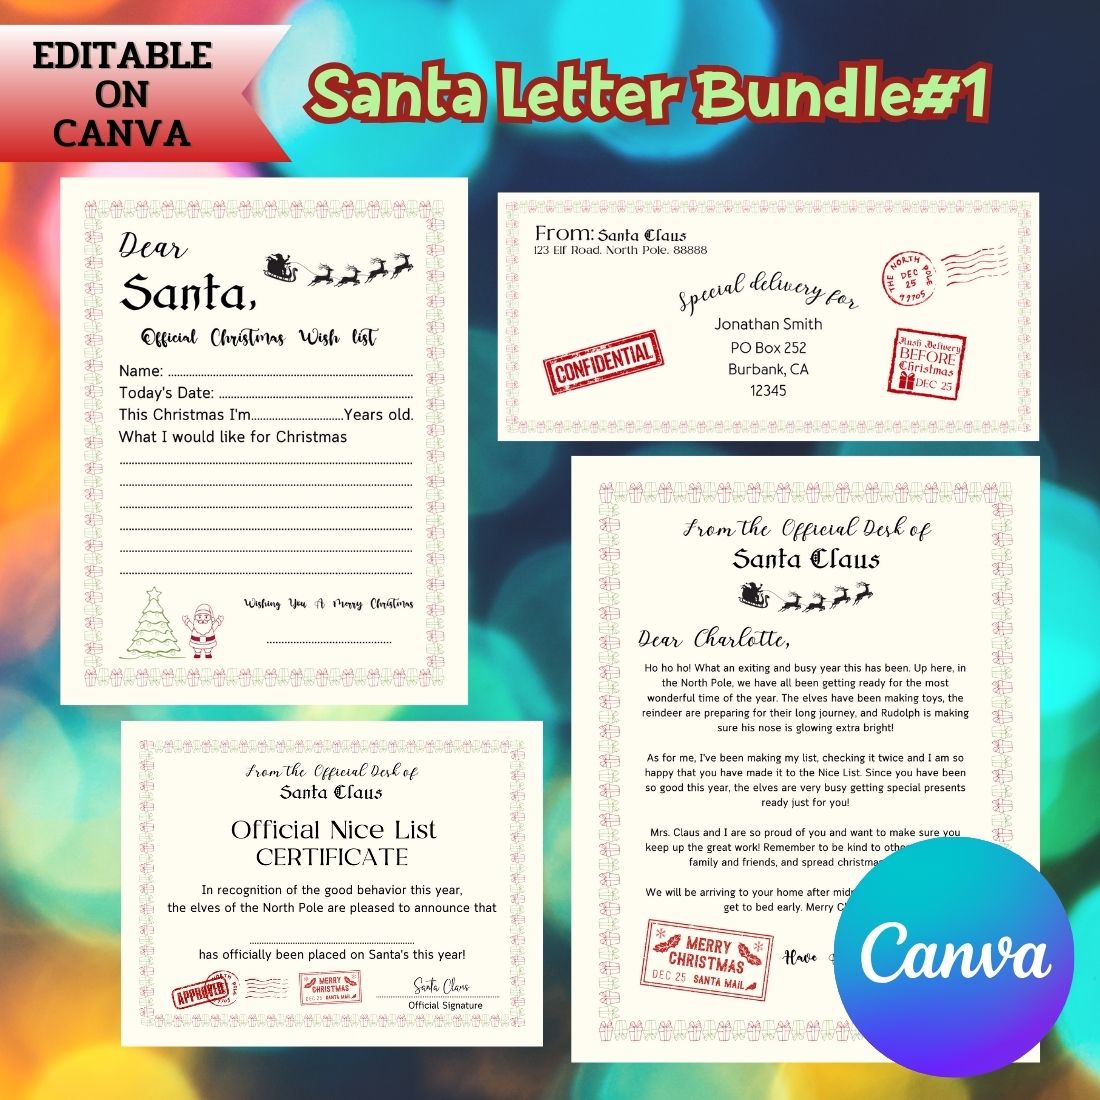 Santa Letter Bundle | Editable by Canva cover image.